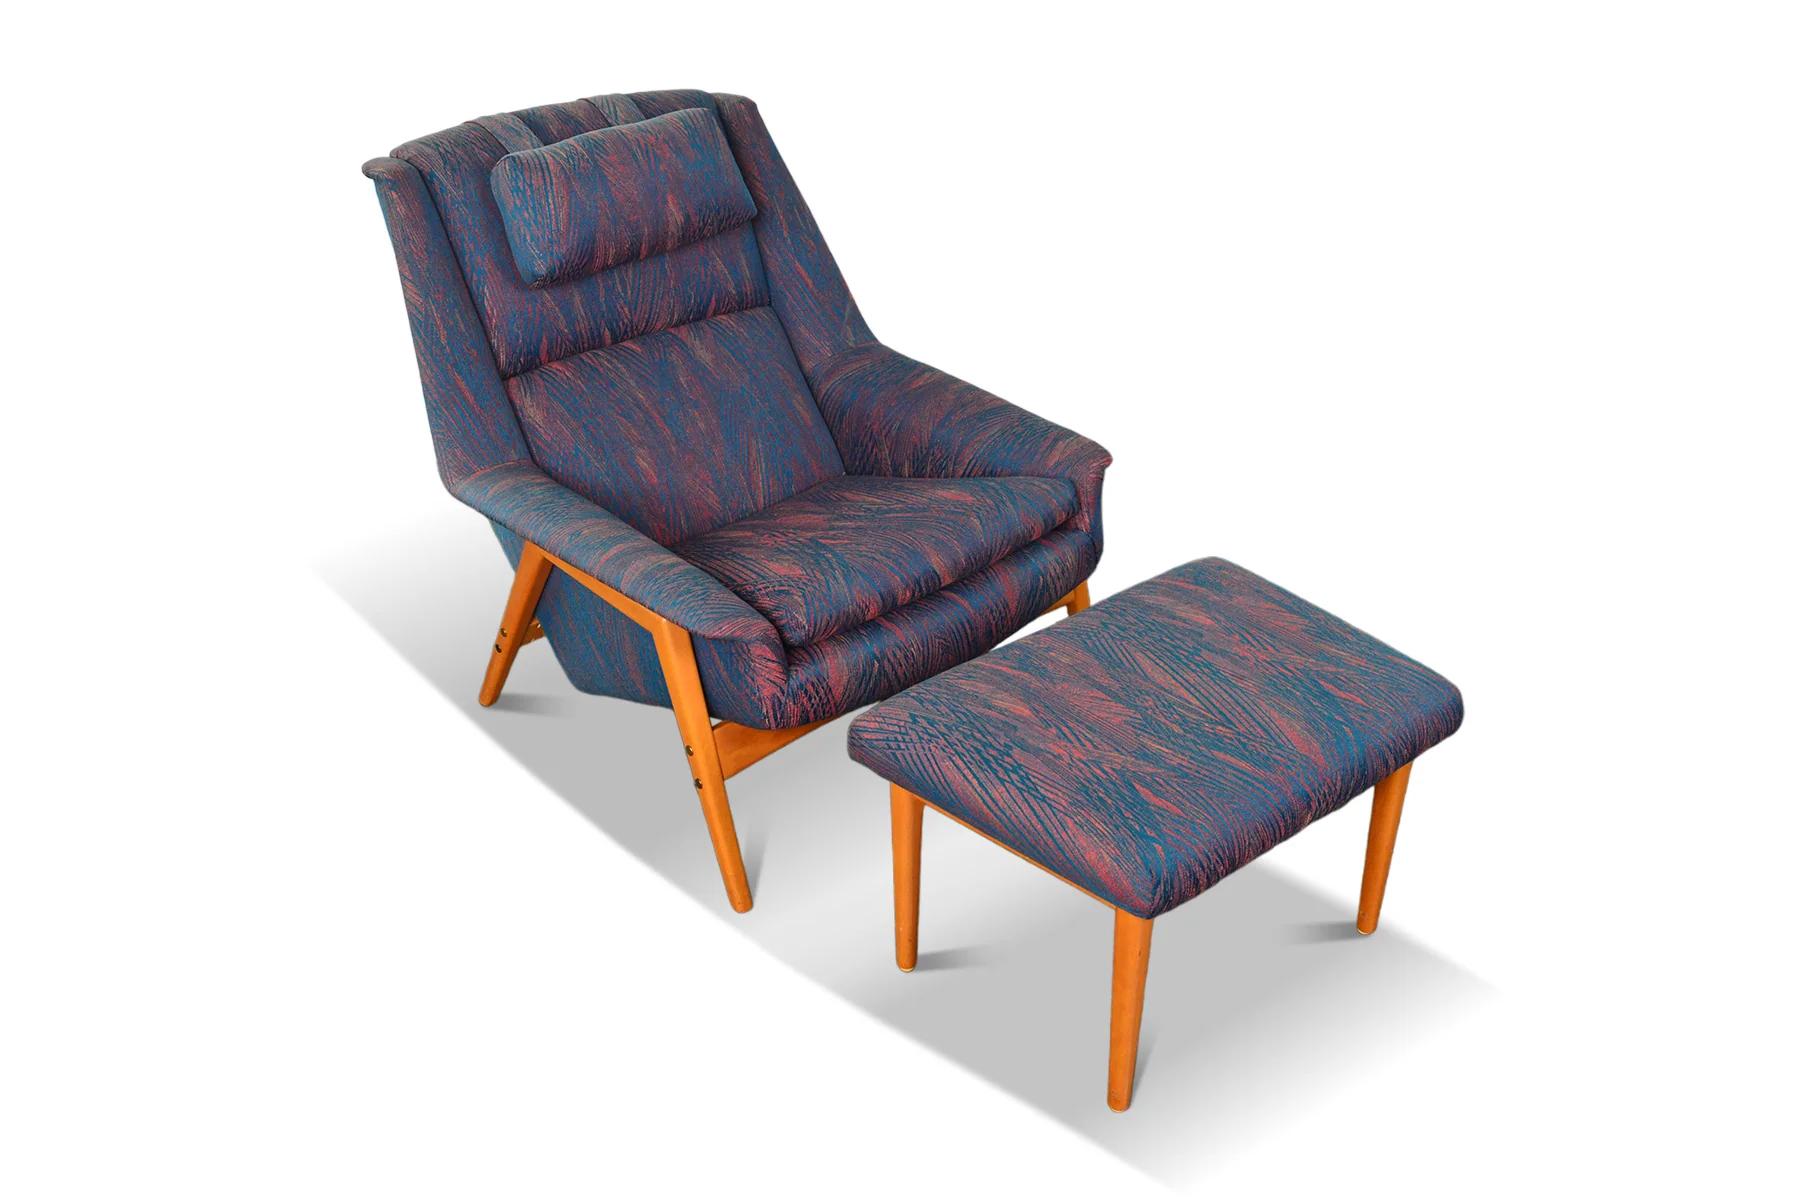 Origin: Sweden
Designer: Folke Olhsson
Manufacturer: DUX
Era: 1960s
Materials: Rosewood
Measurements: Chair: 33″ wide x 32″ deep x 34